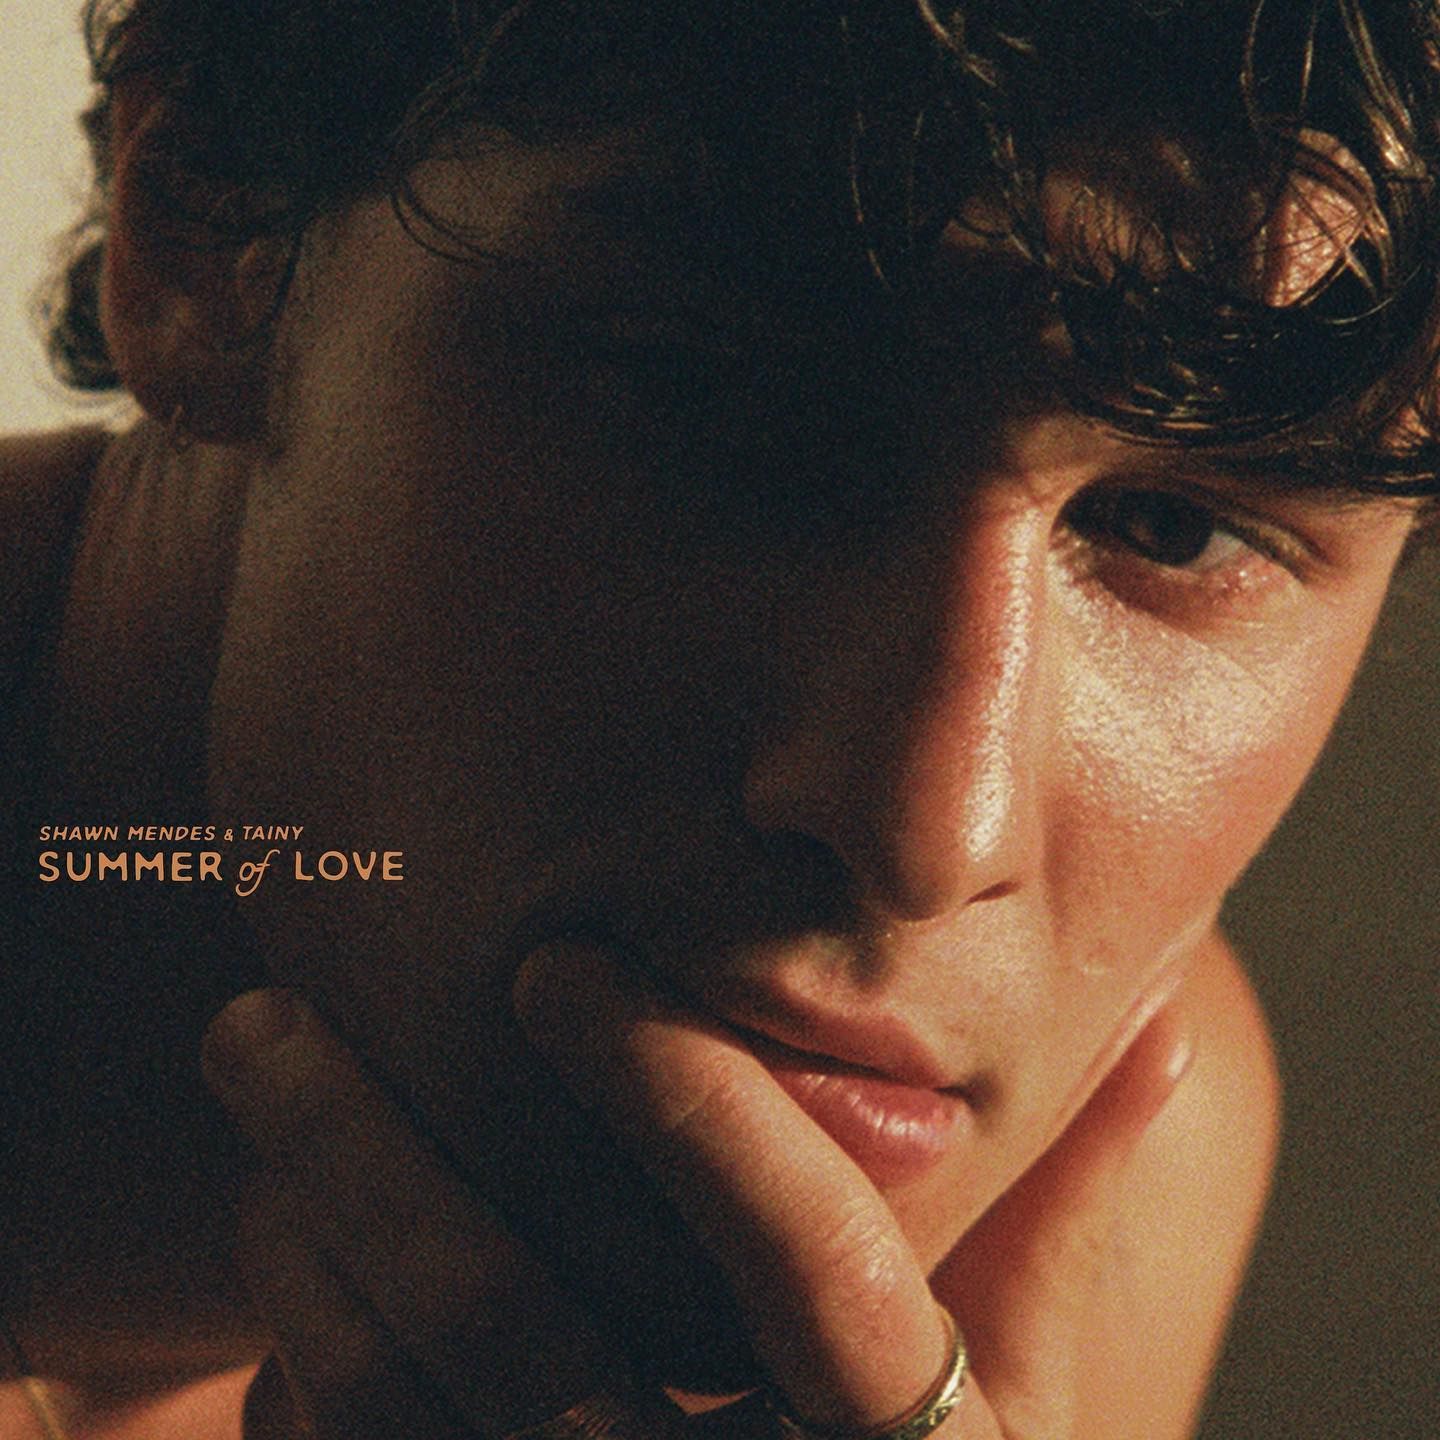 Imagem do álbum Summer Of Love (feat. Tainy) do(a) artista Shawn Mendes